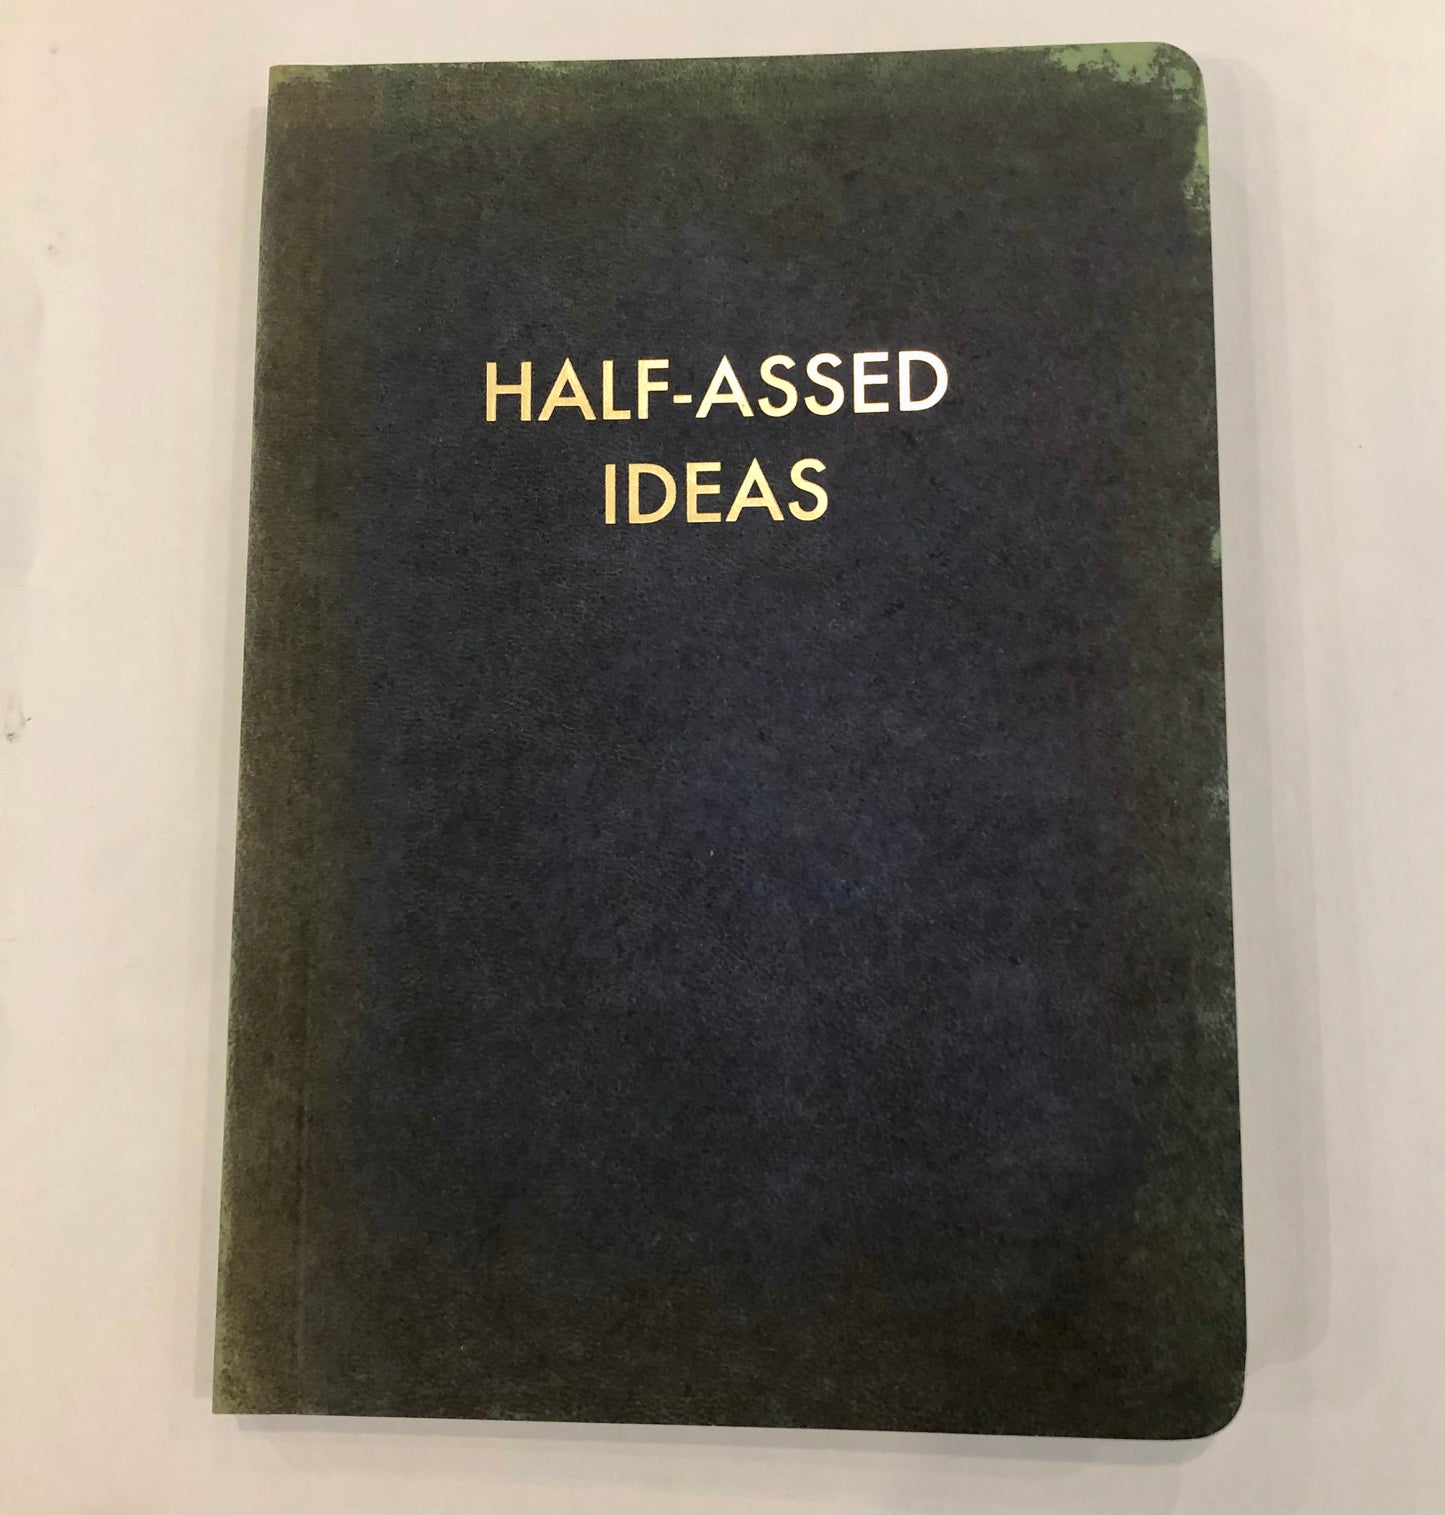 Journal, Half-Assed Ideas